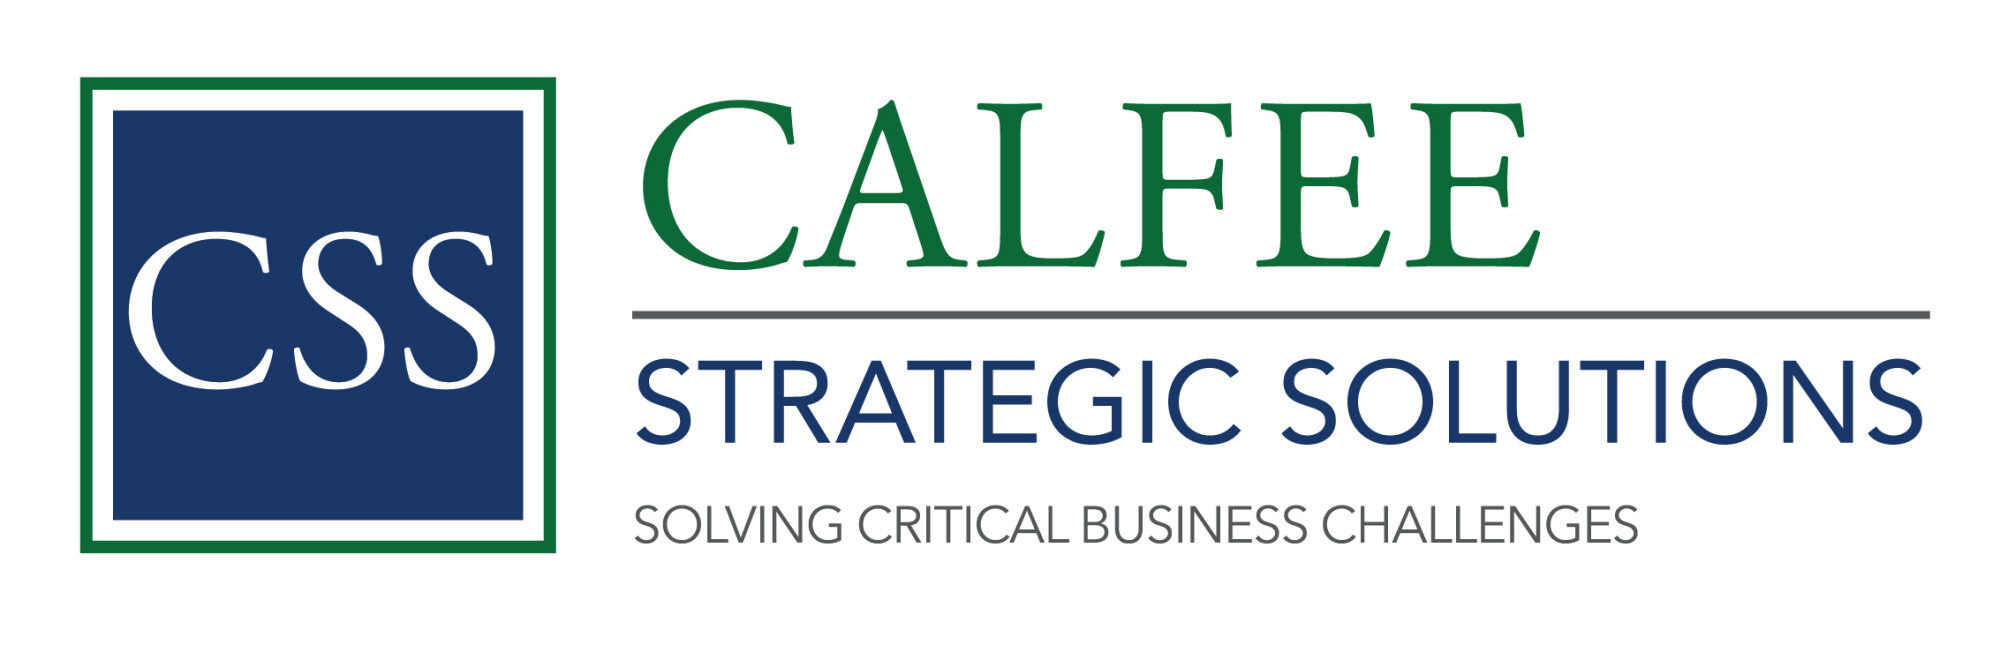 Calfee Strategic Solutions